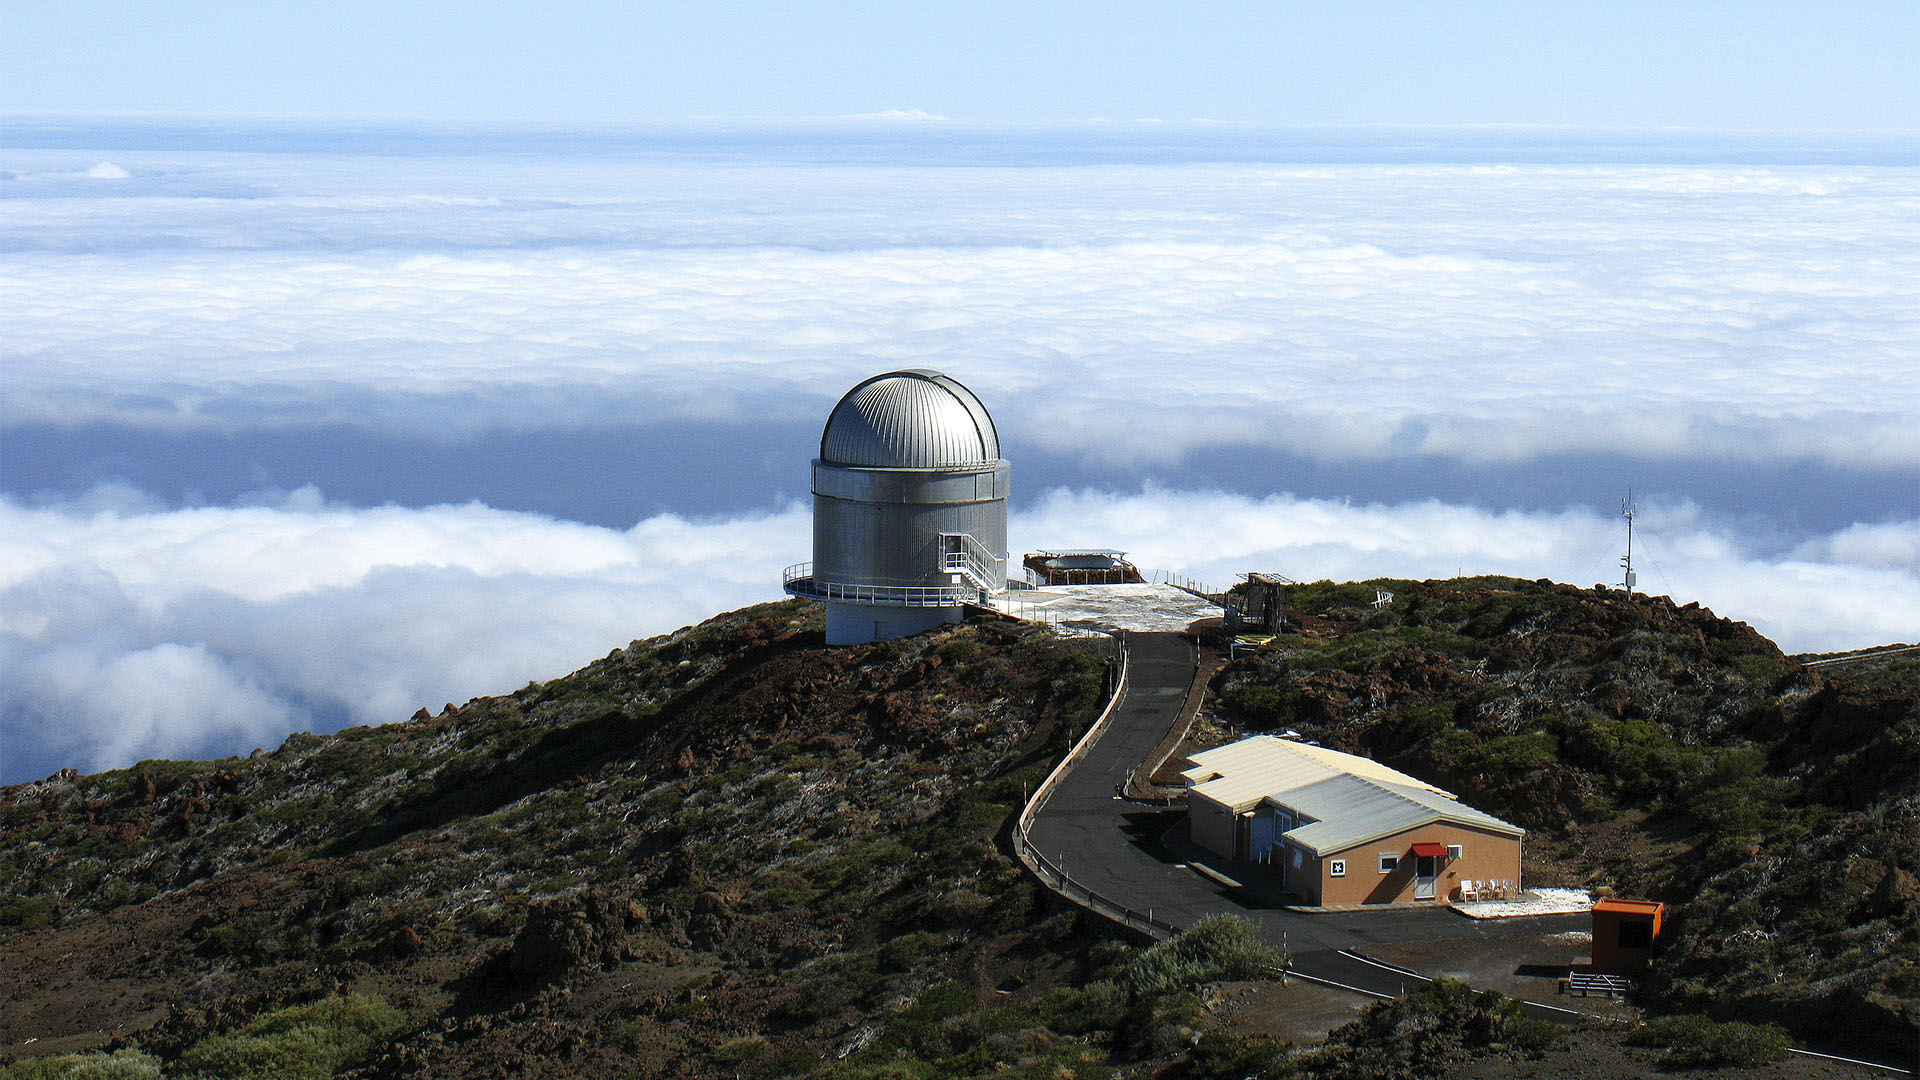 Nordic Optical Telescope (NOT) Observatorium Roque de los Muchachos, La Palma (Michael Hanselmann)